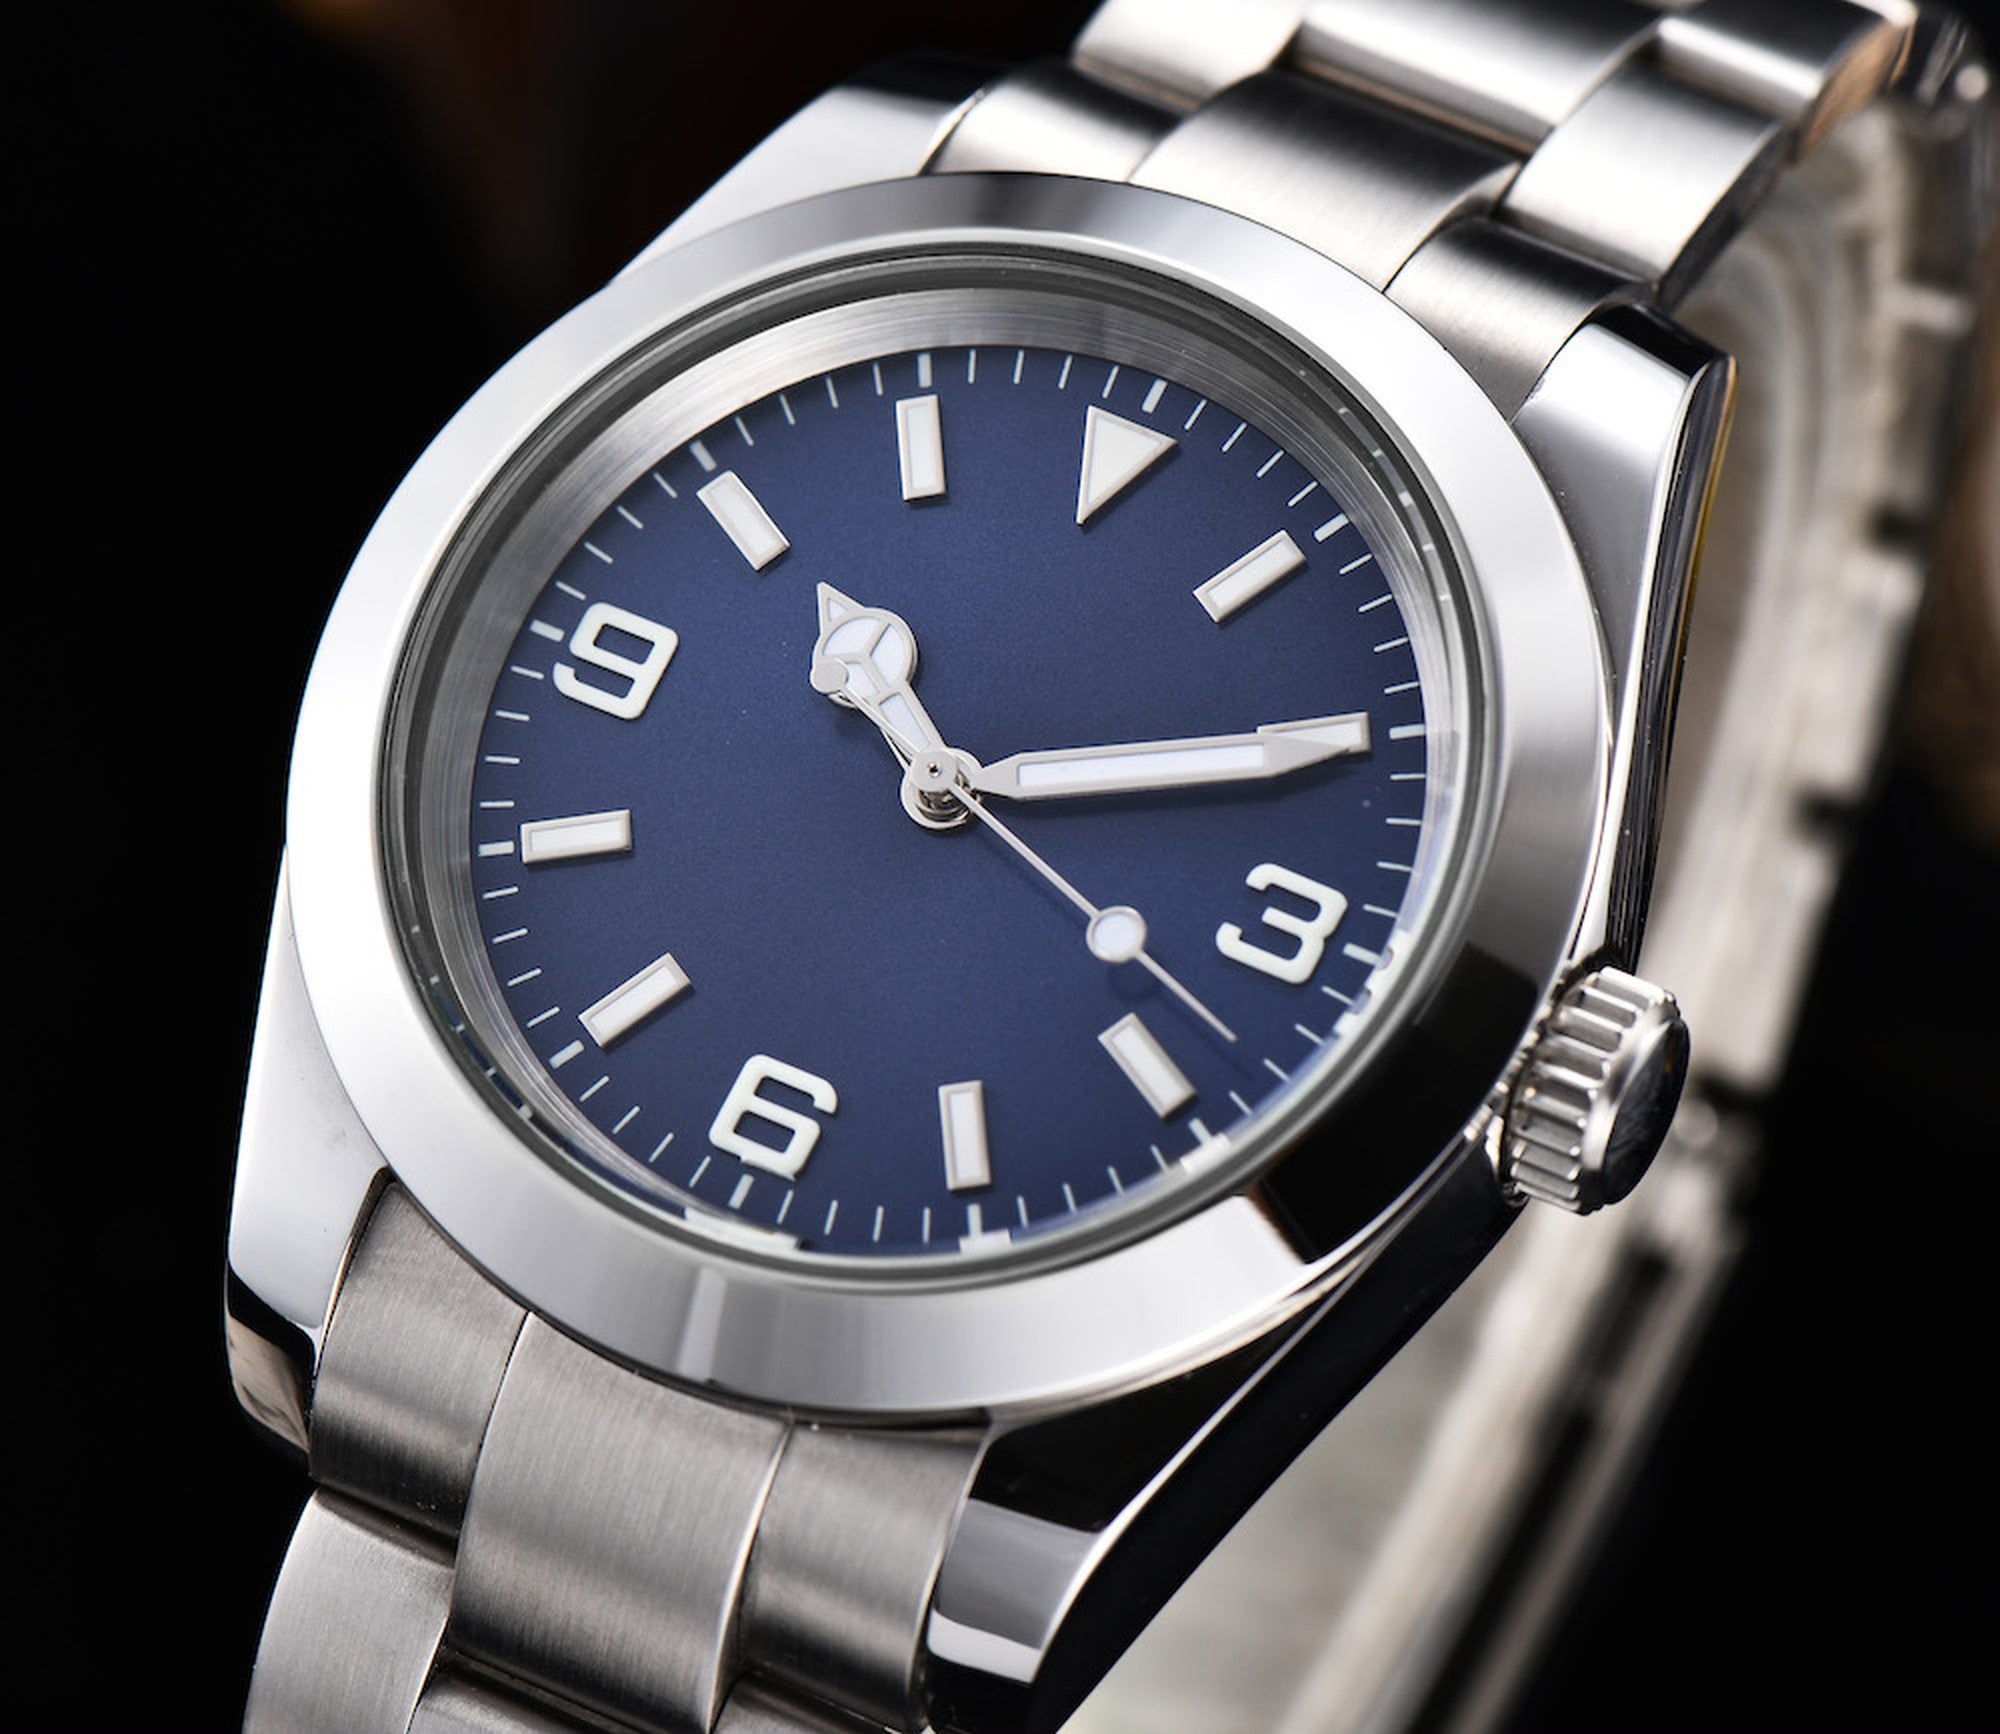 PARNIS Men's self-winding watch / high quality movement / explorer oyster blue / popular luxury brand / waterproof